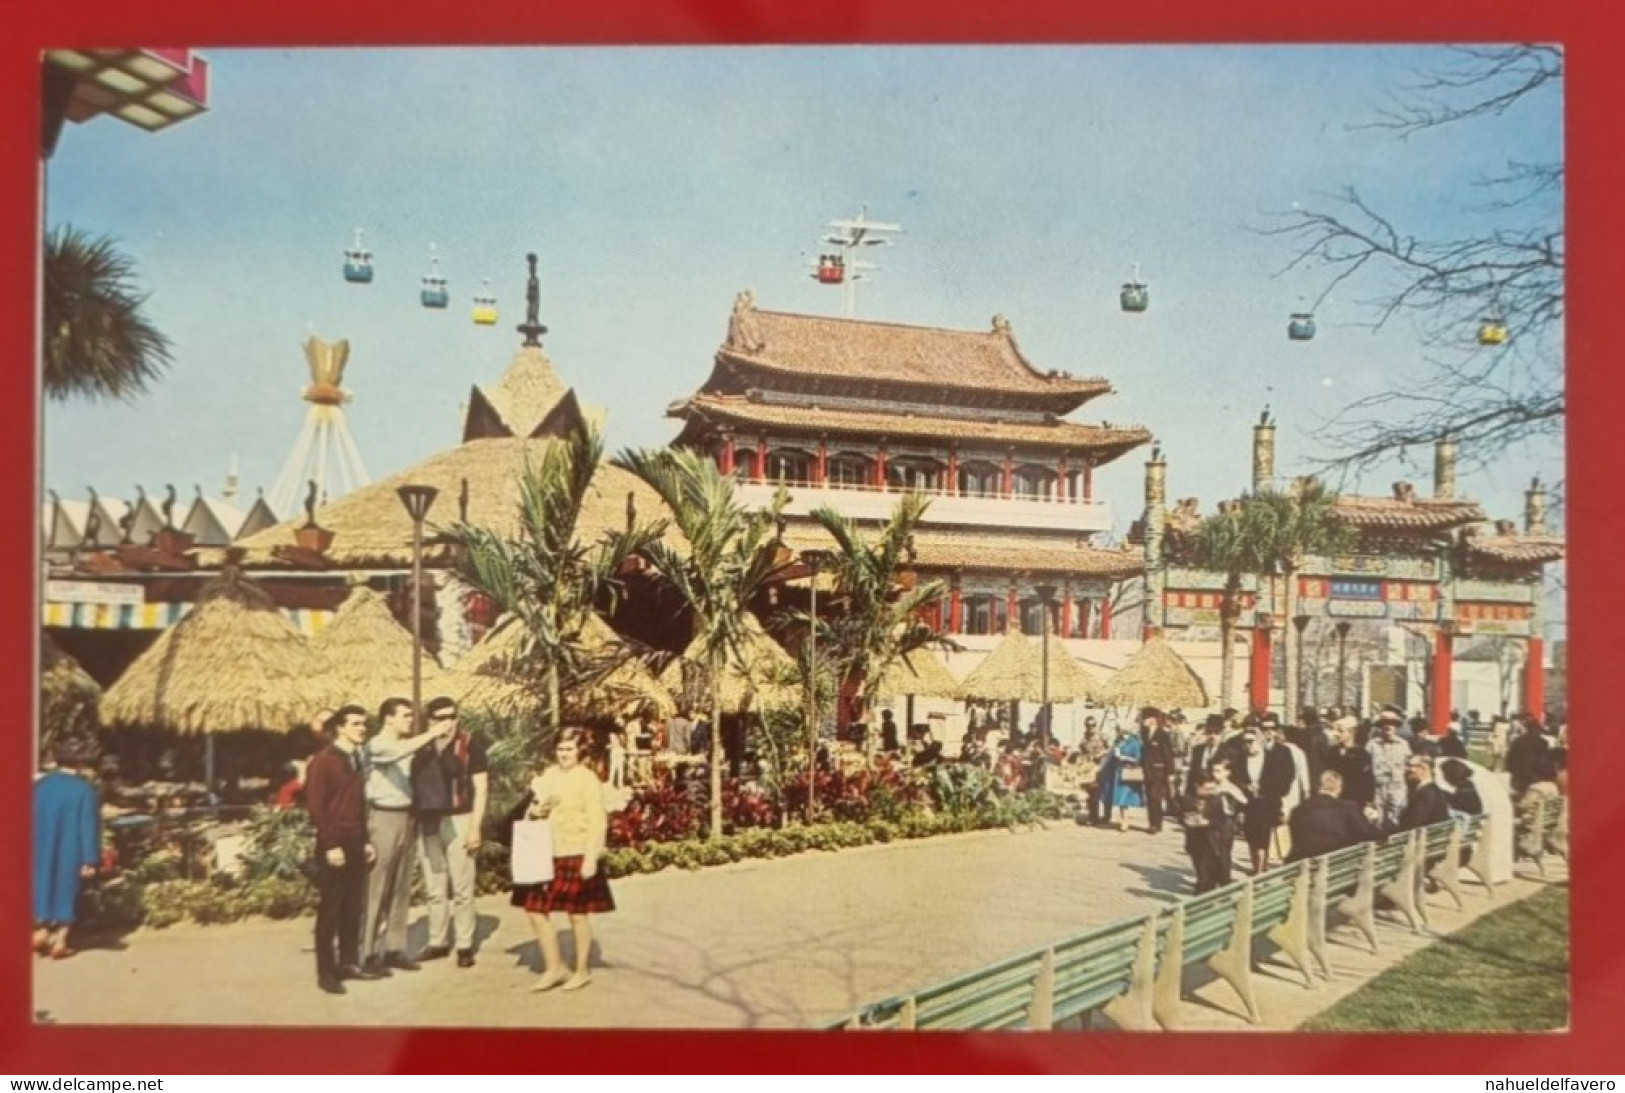 Uncirculated Postcard - USA - NY, NEW YORK WORLD'S FAIR 1964-65 - KENNEDY CIRCLE LOOKING NORTH - Exposiciones